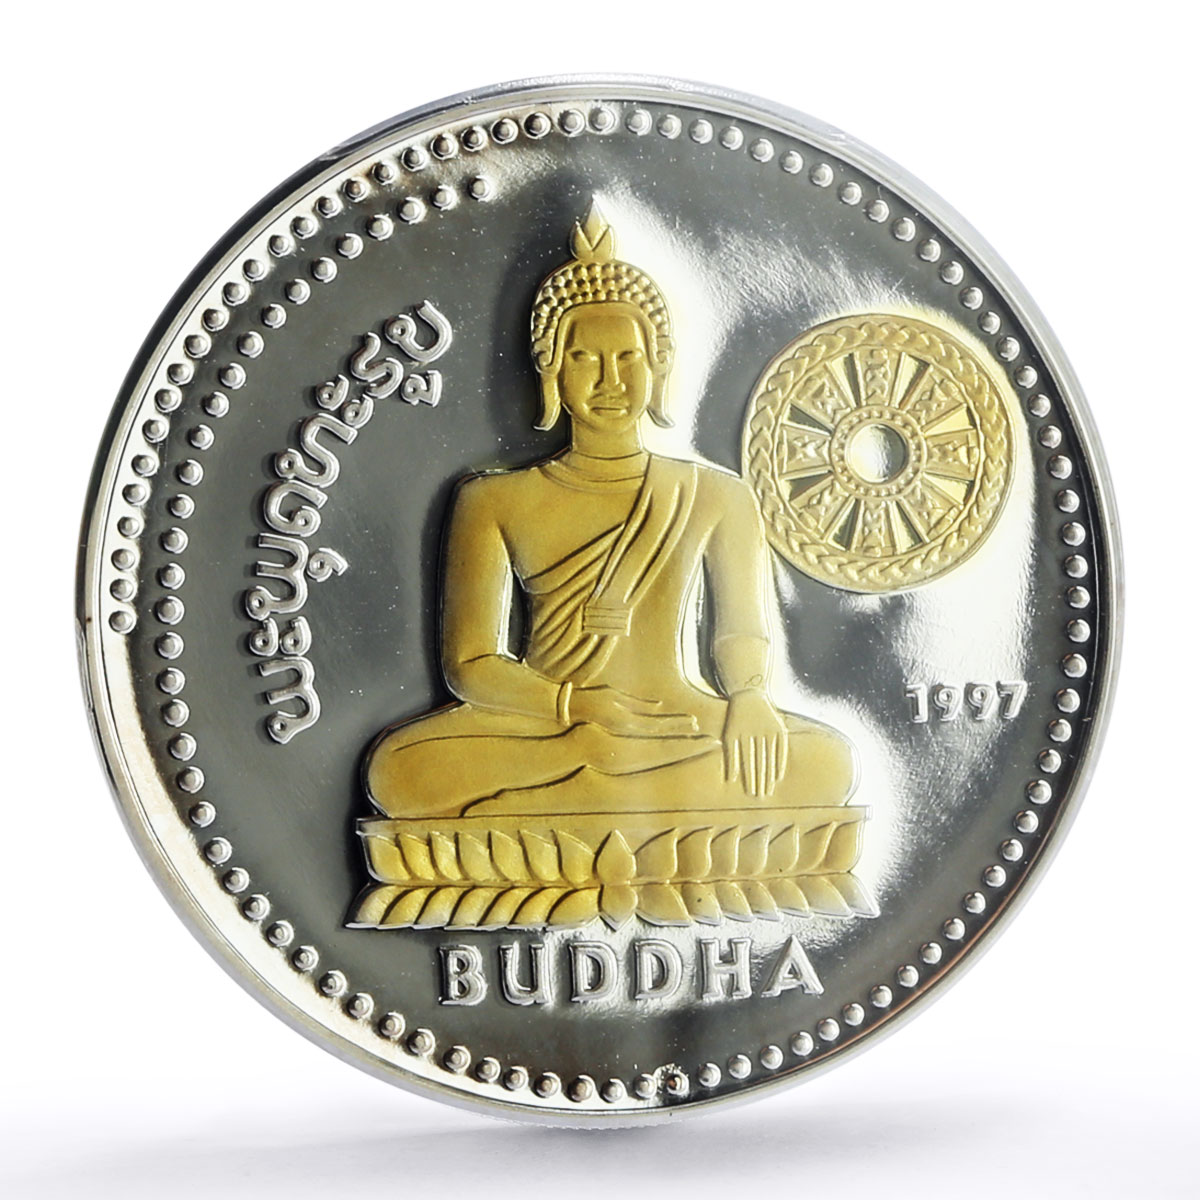 Laos 50 kip Religion Buddhism Buddha Wheel PR69 PCGS gilded silver coin 1997